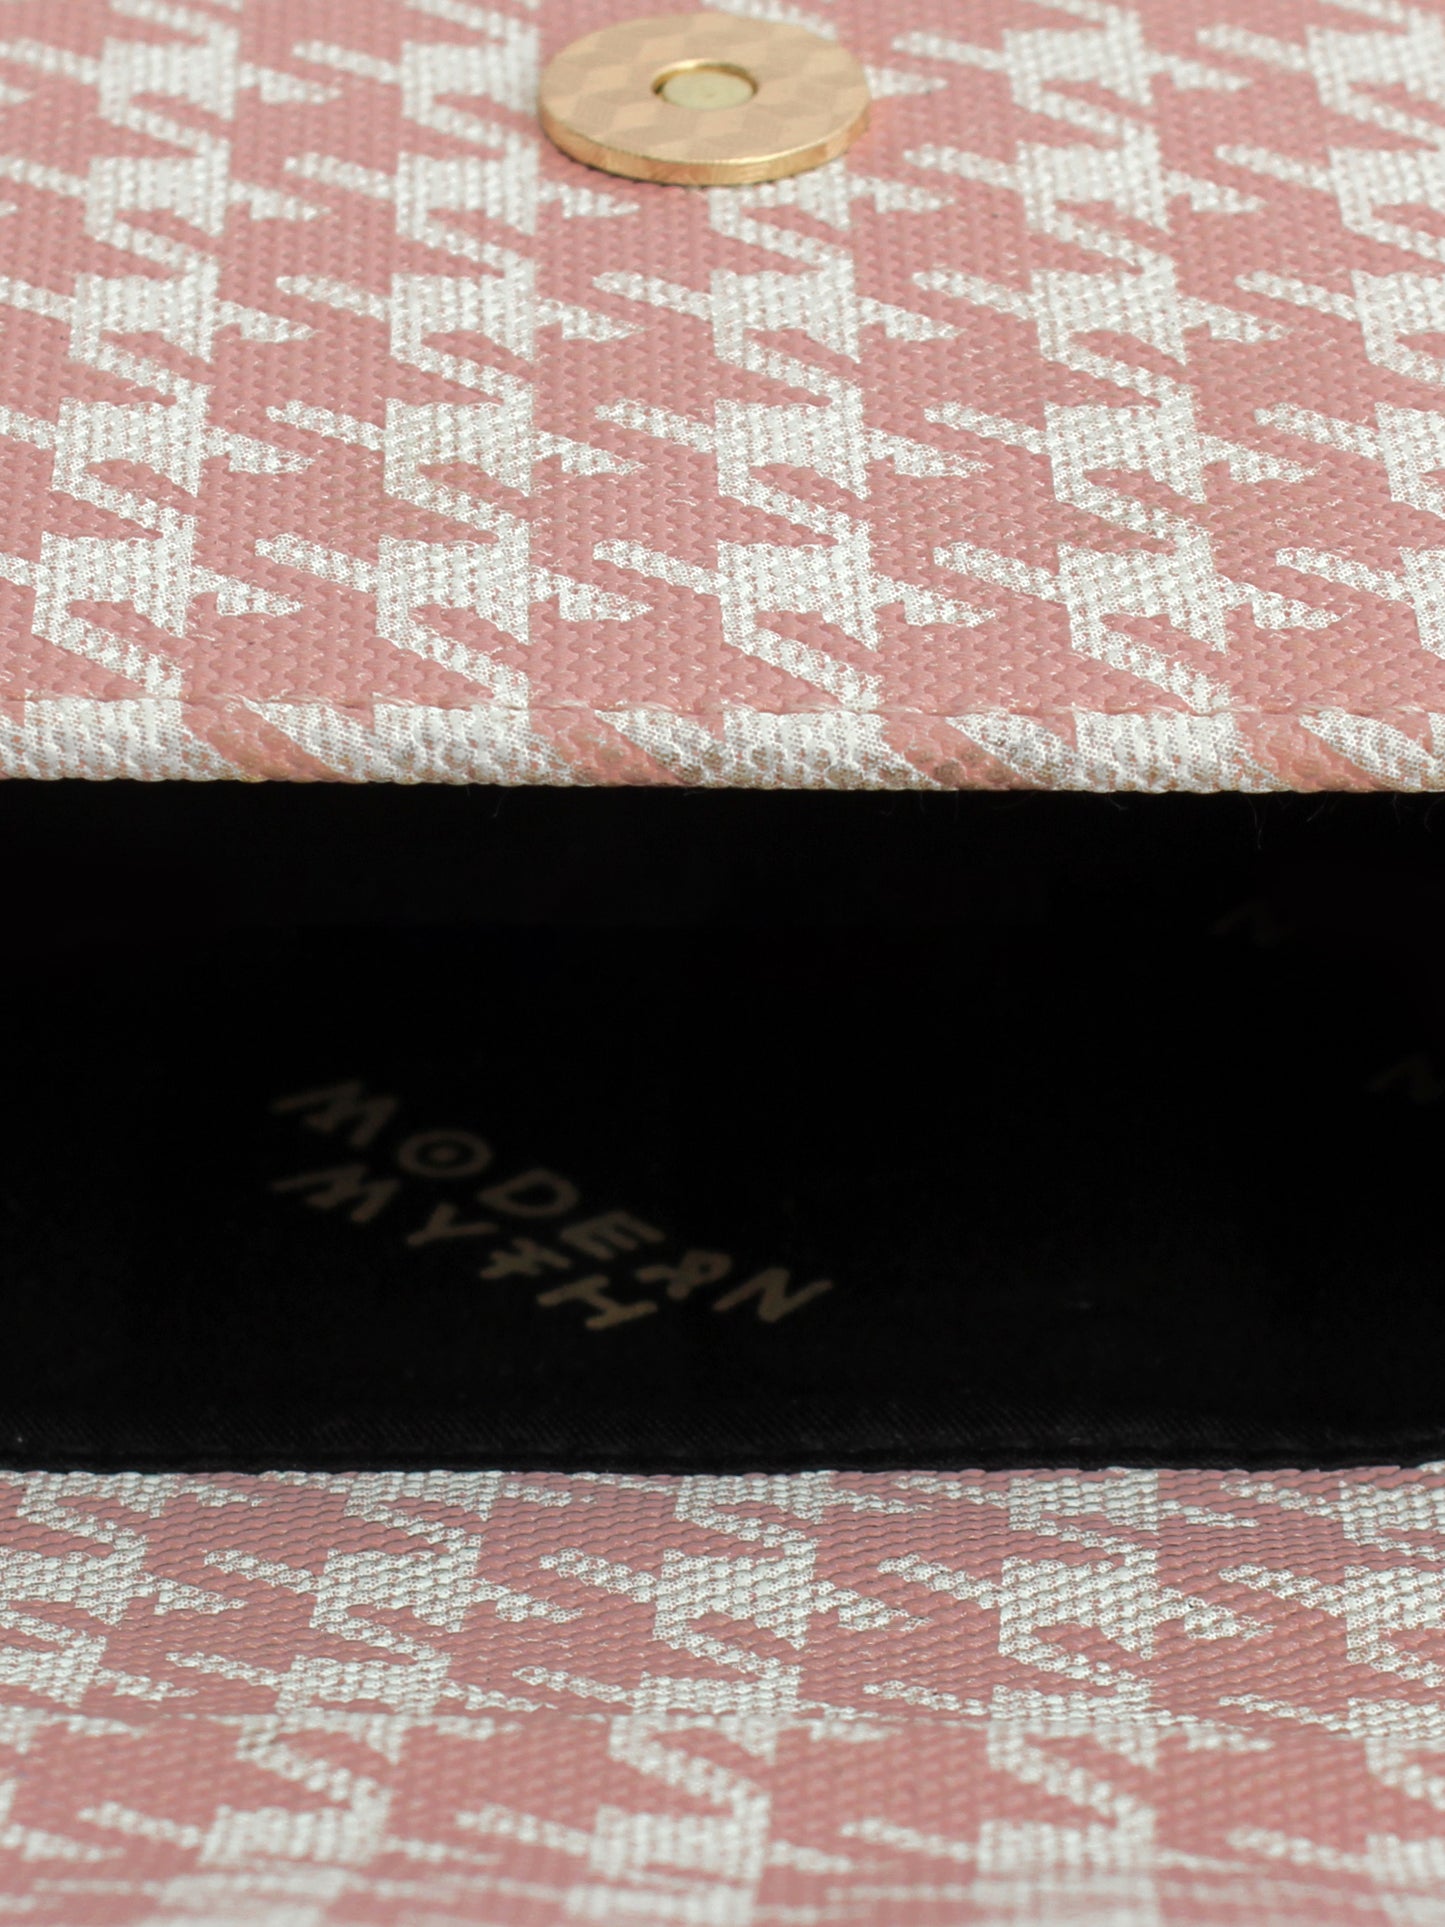 Nano Pink & White Houndstooth Mini Box Bag | Modern Myth